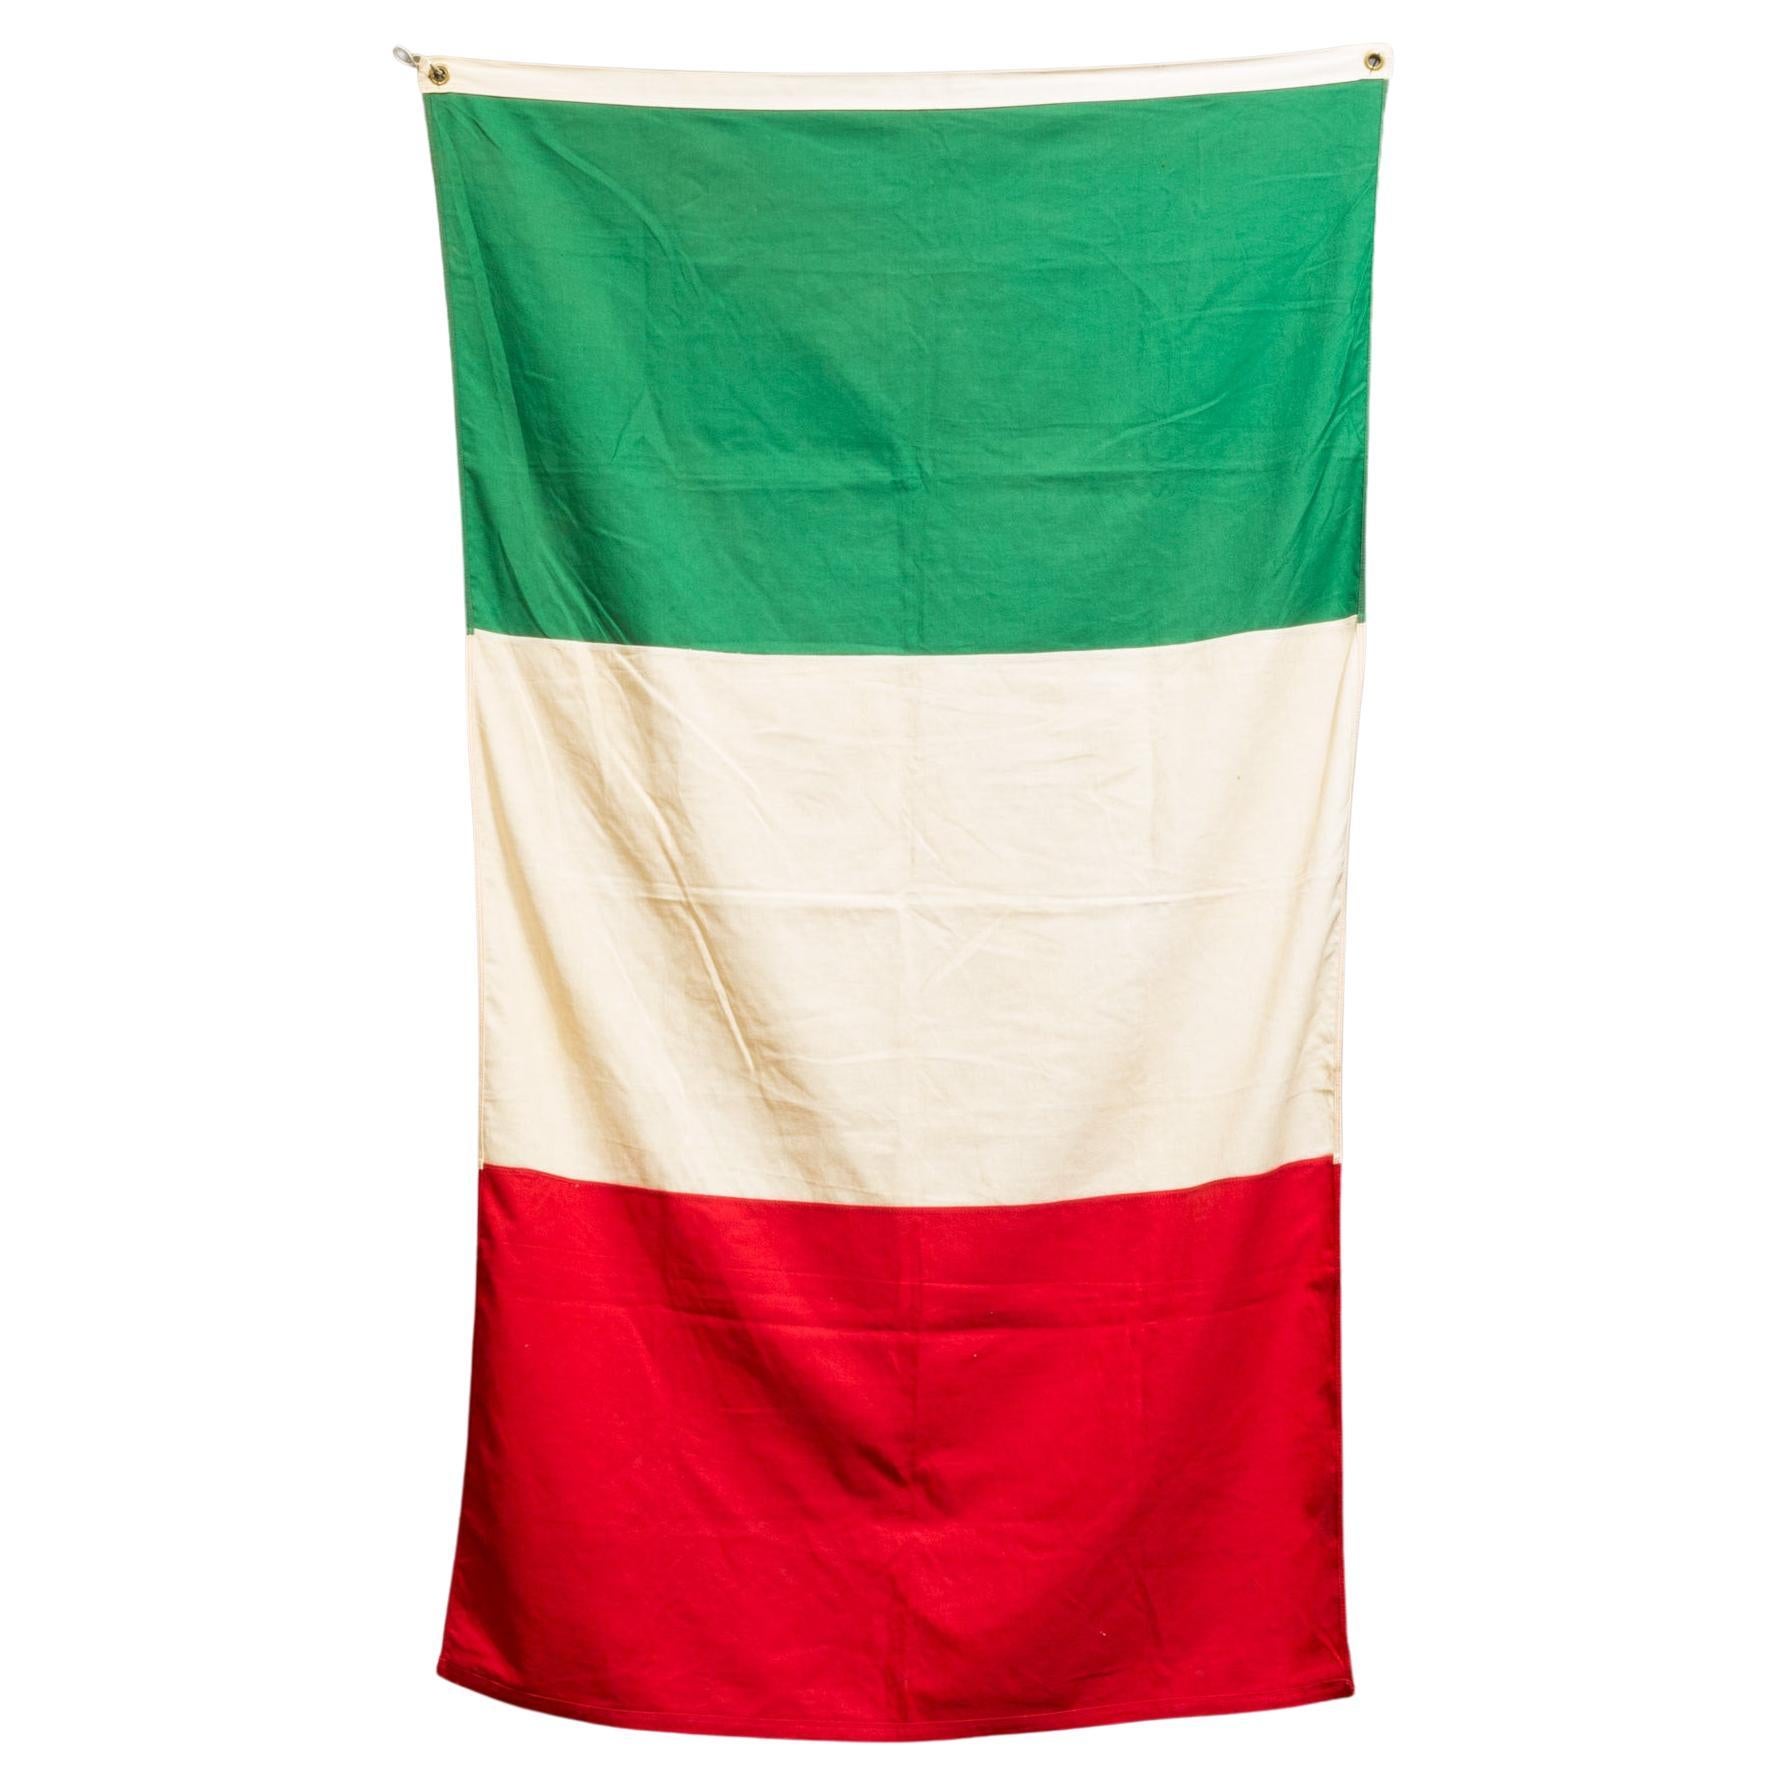 Vintage Italian Flag c.1940  (FREE SHIPPING)